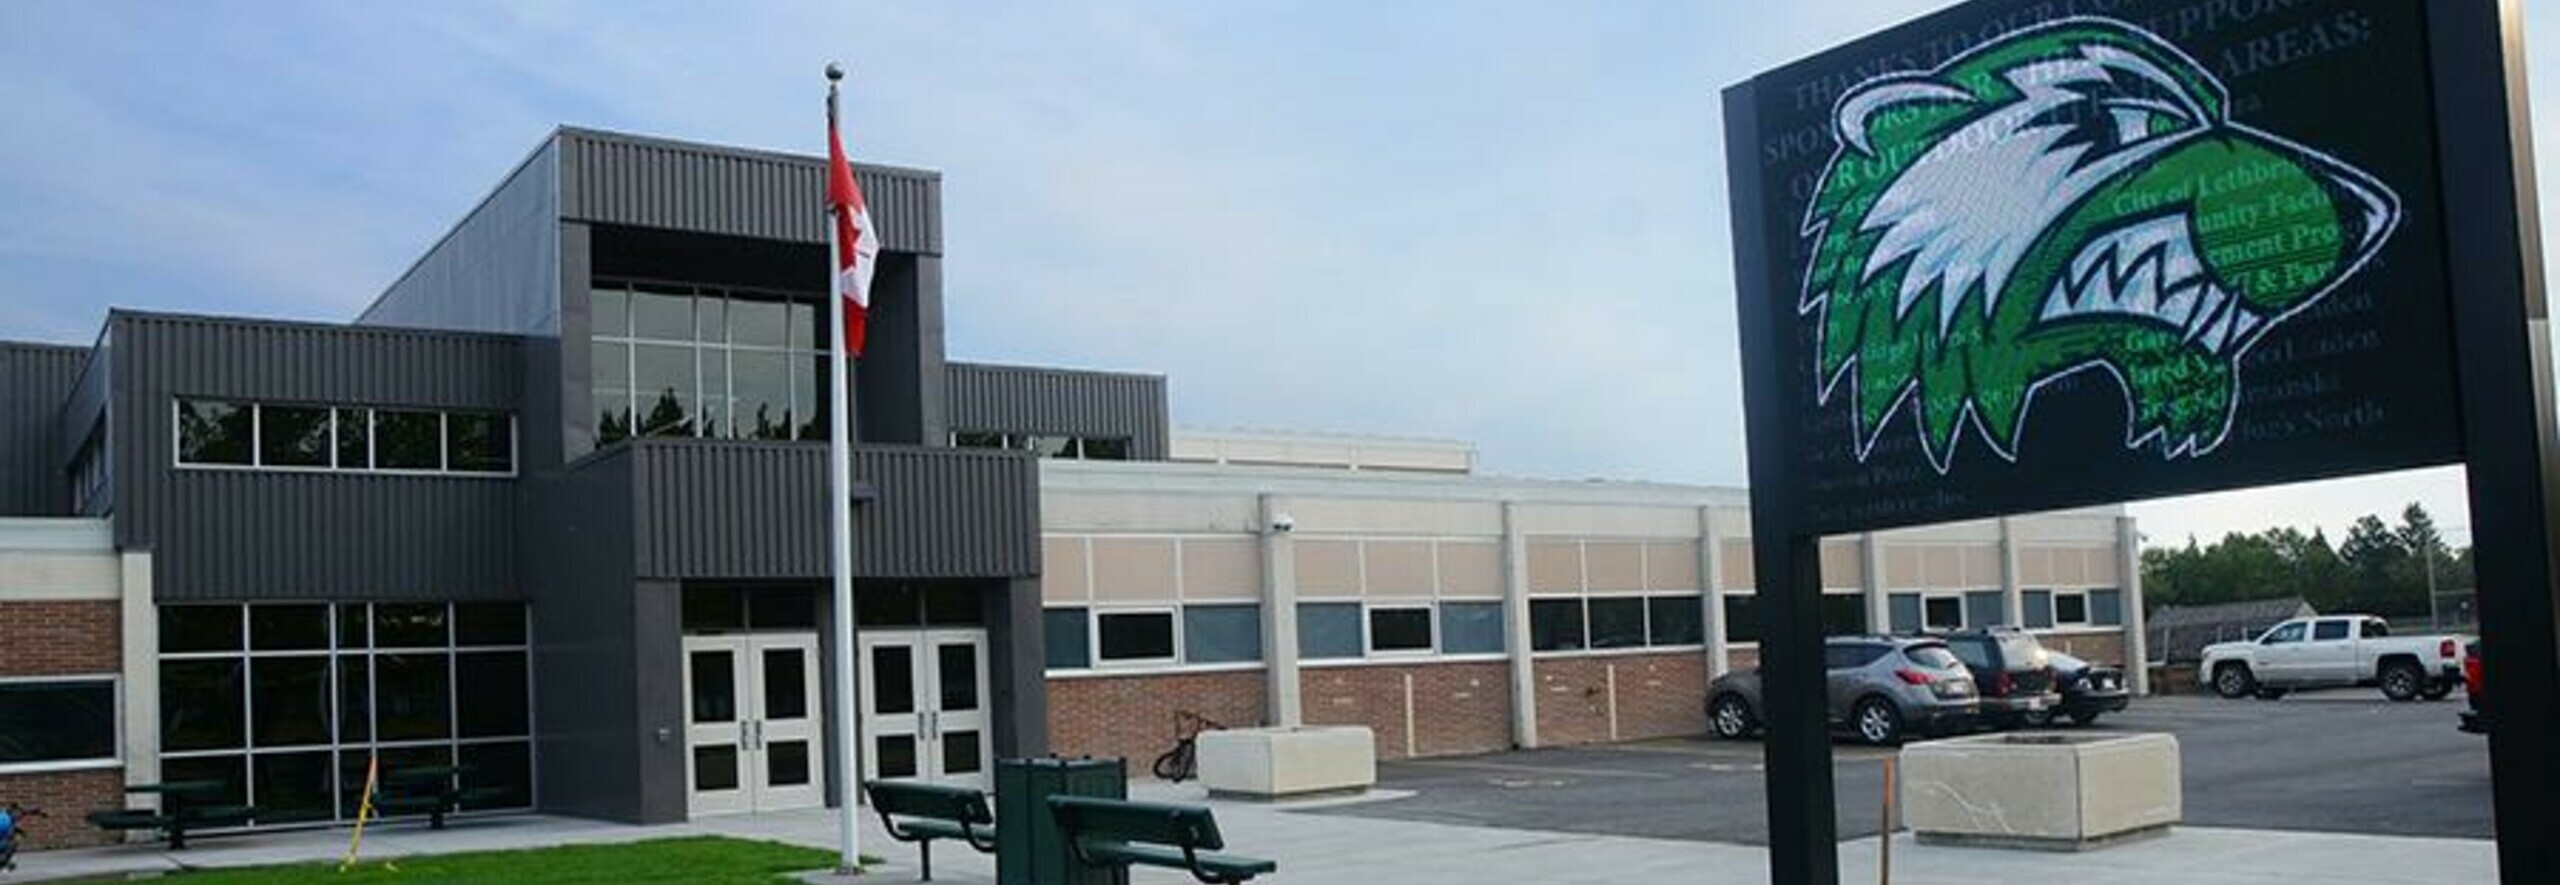 Wilson Middle School Banner Photo